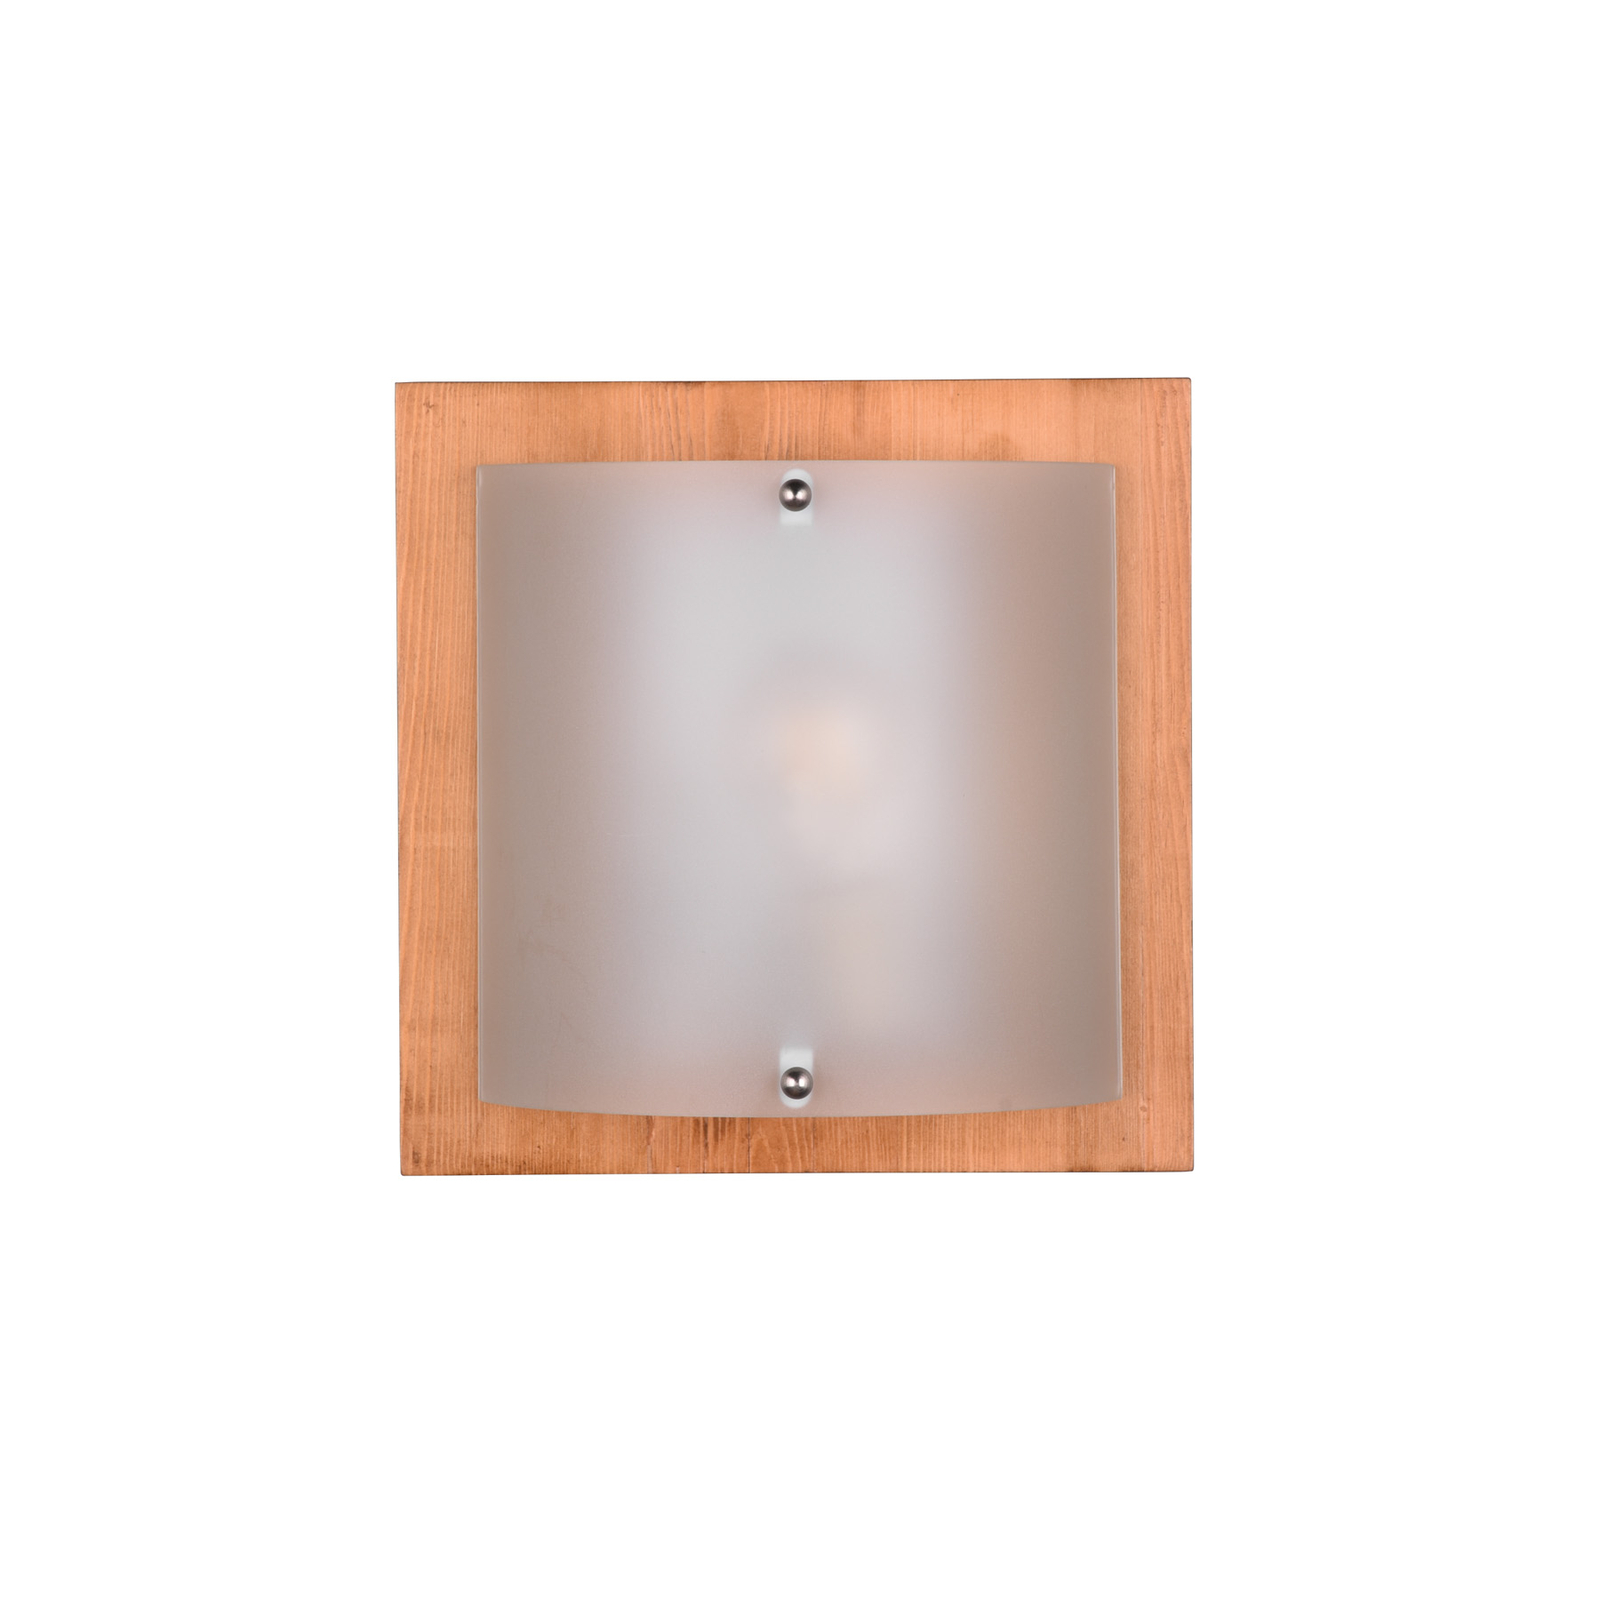 Pali wandlamp, licht hout/wit, hoogte 25 cm